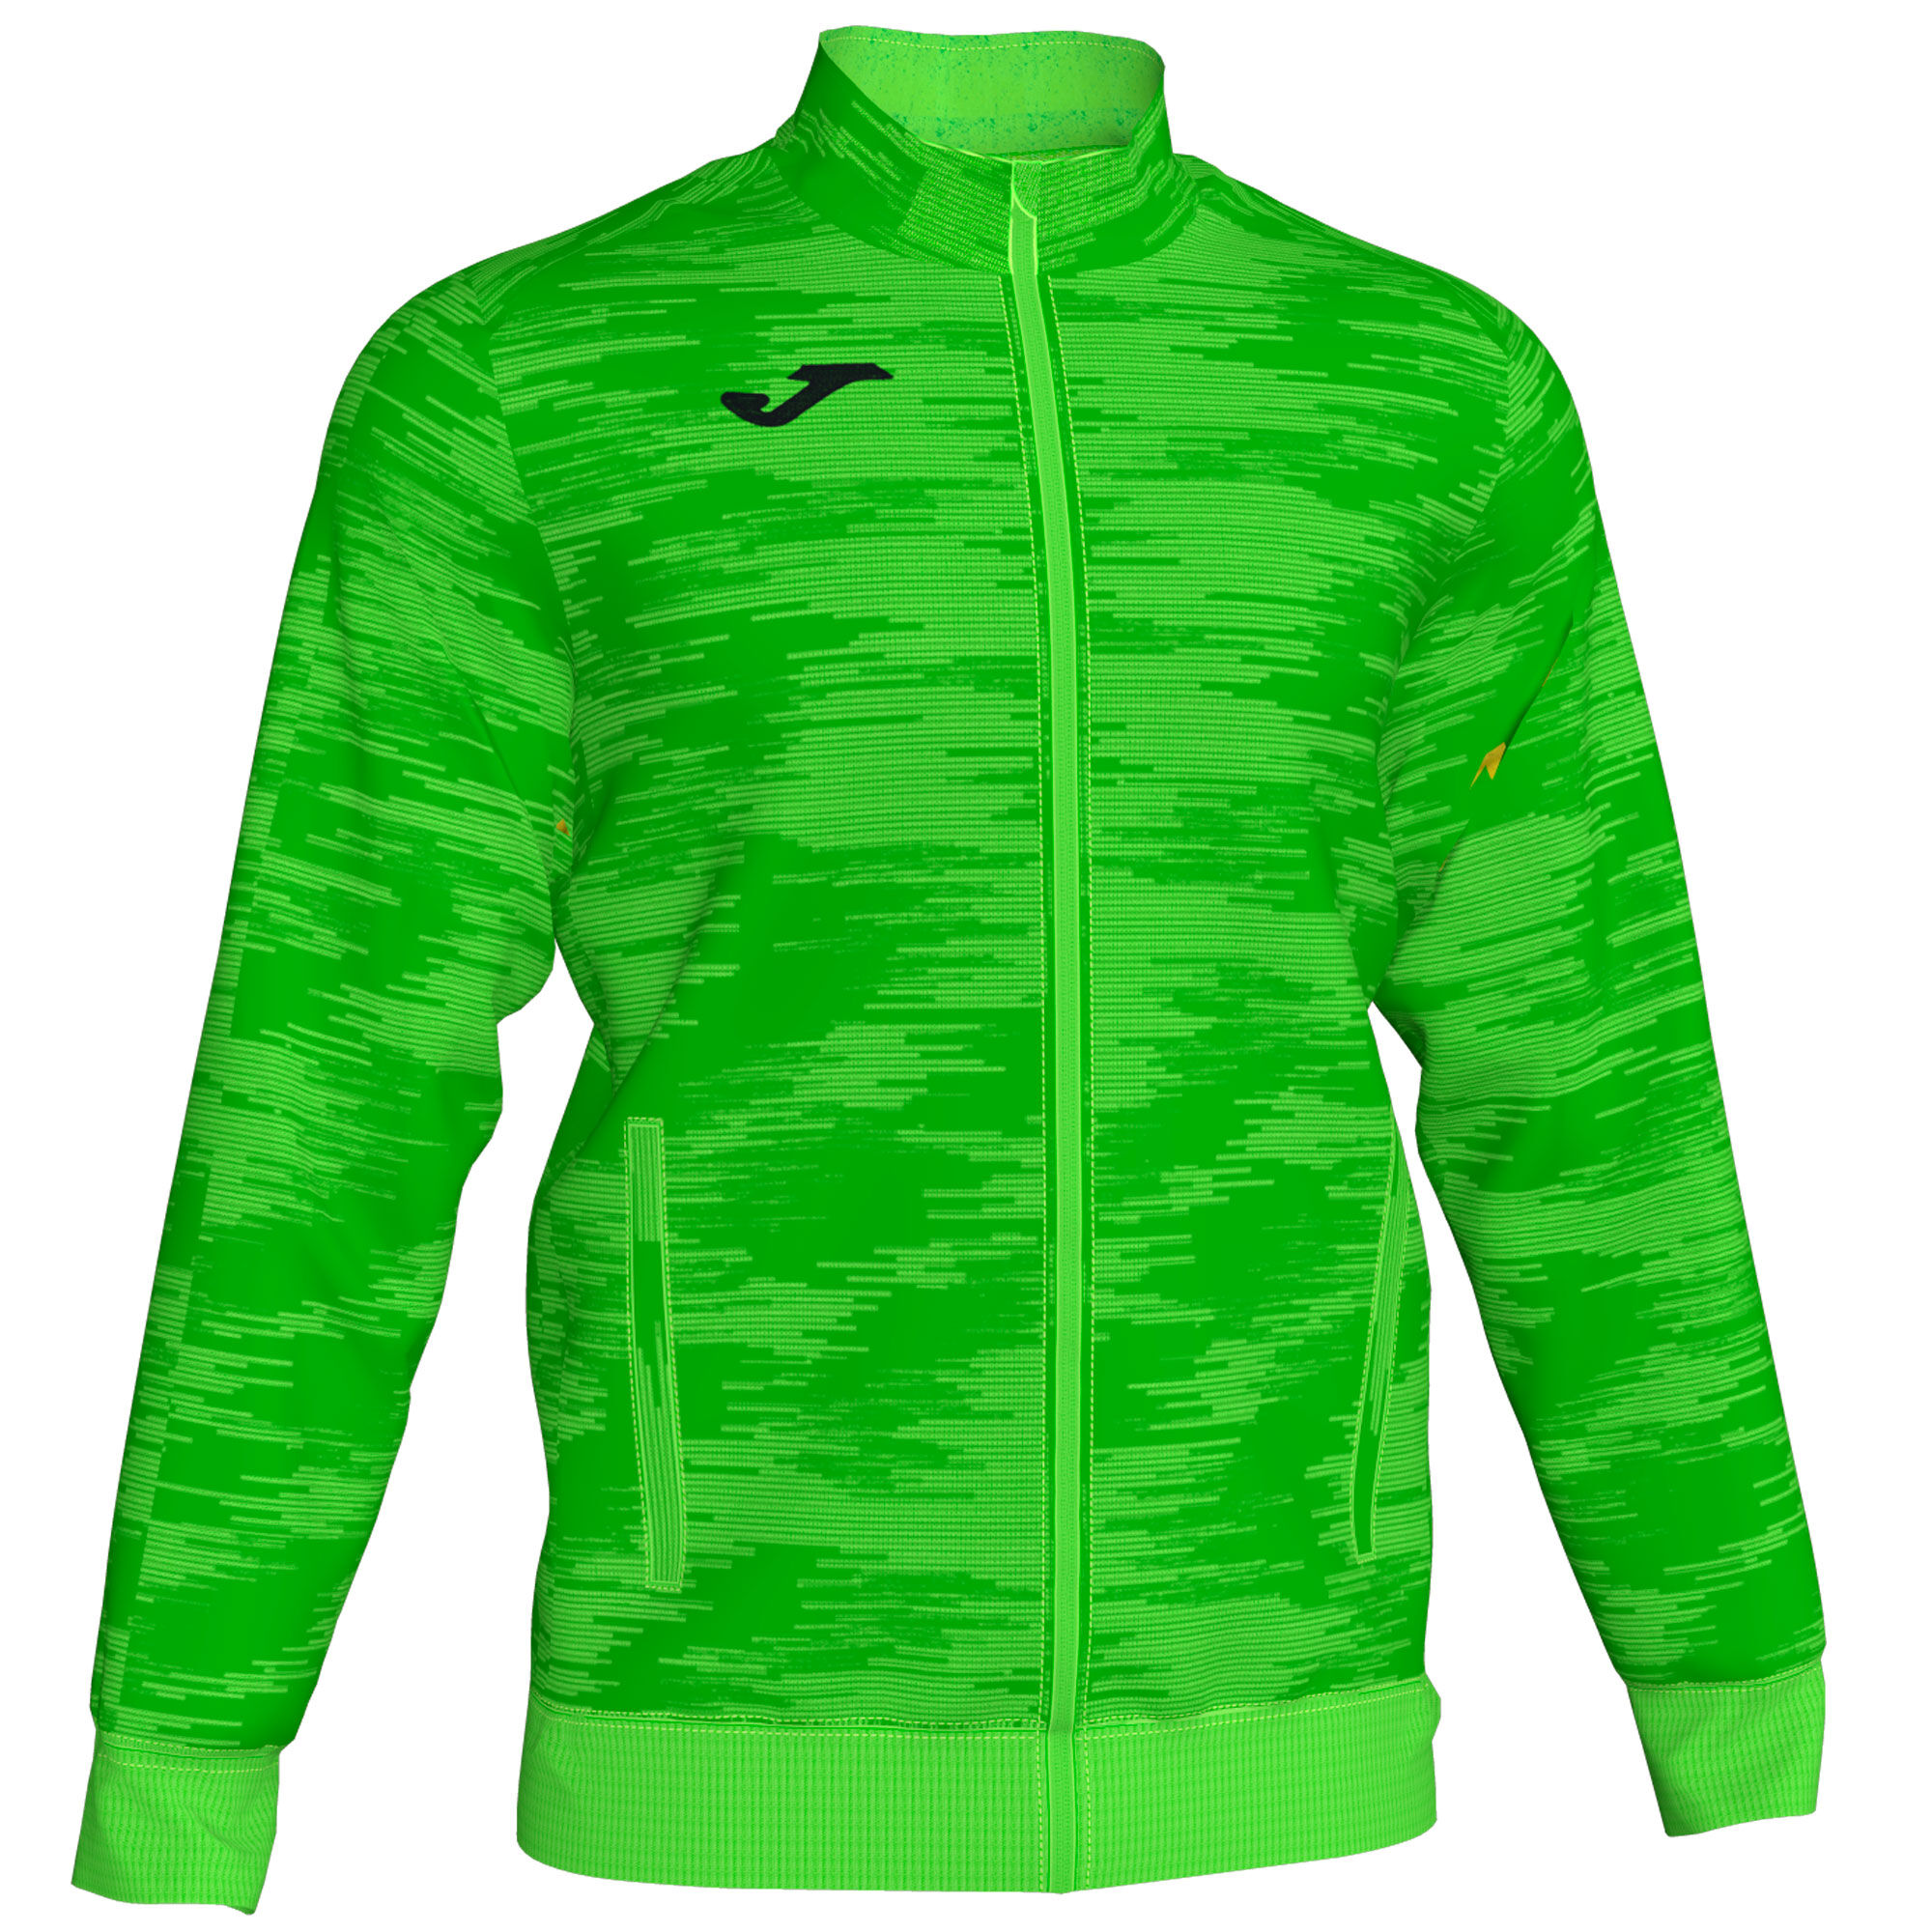 Jachetă bărbaȚi Grafity verde fosforescent